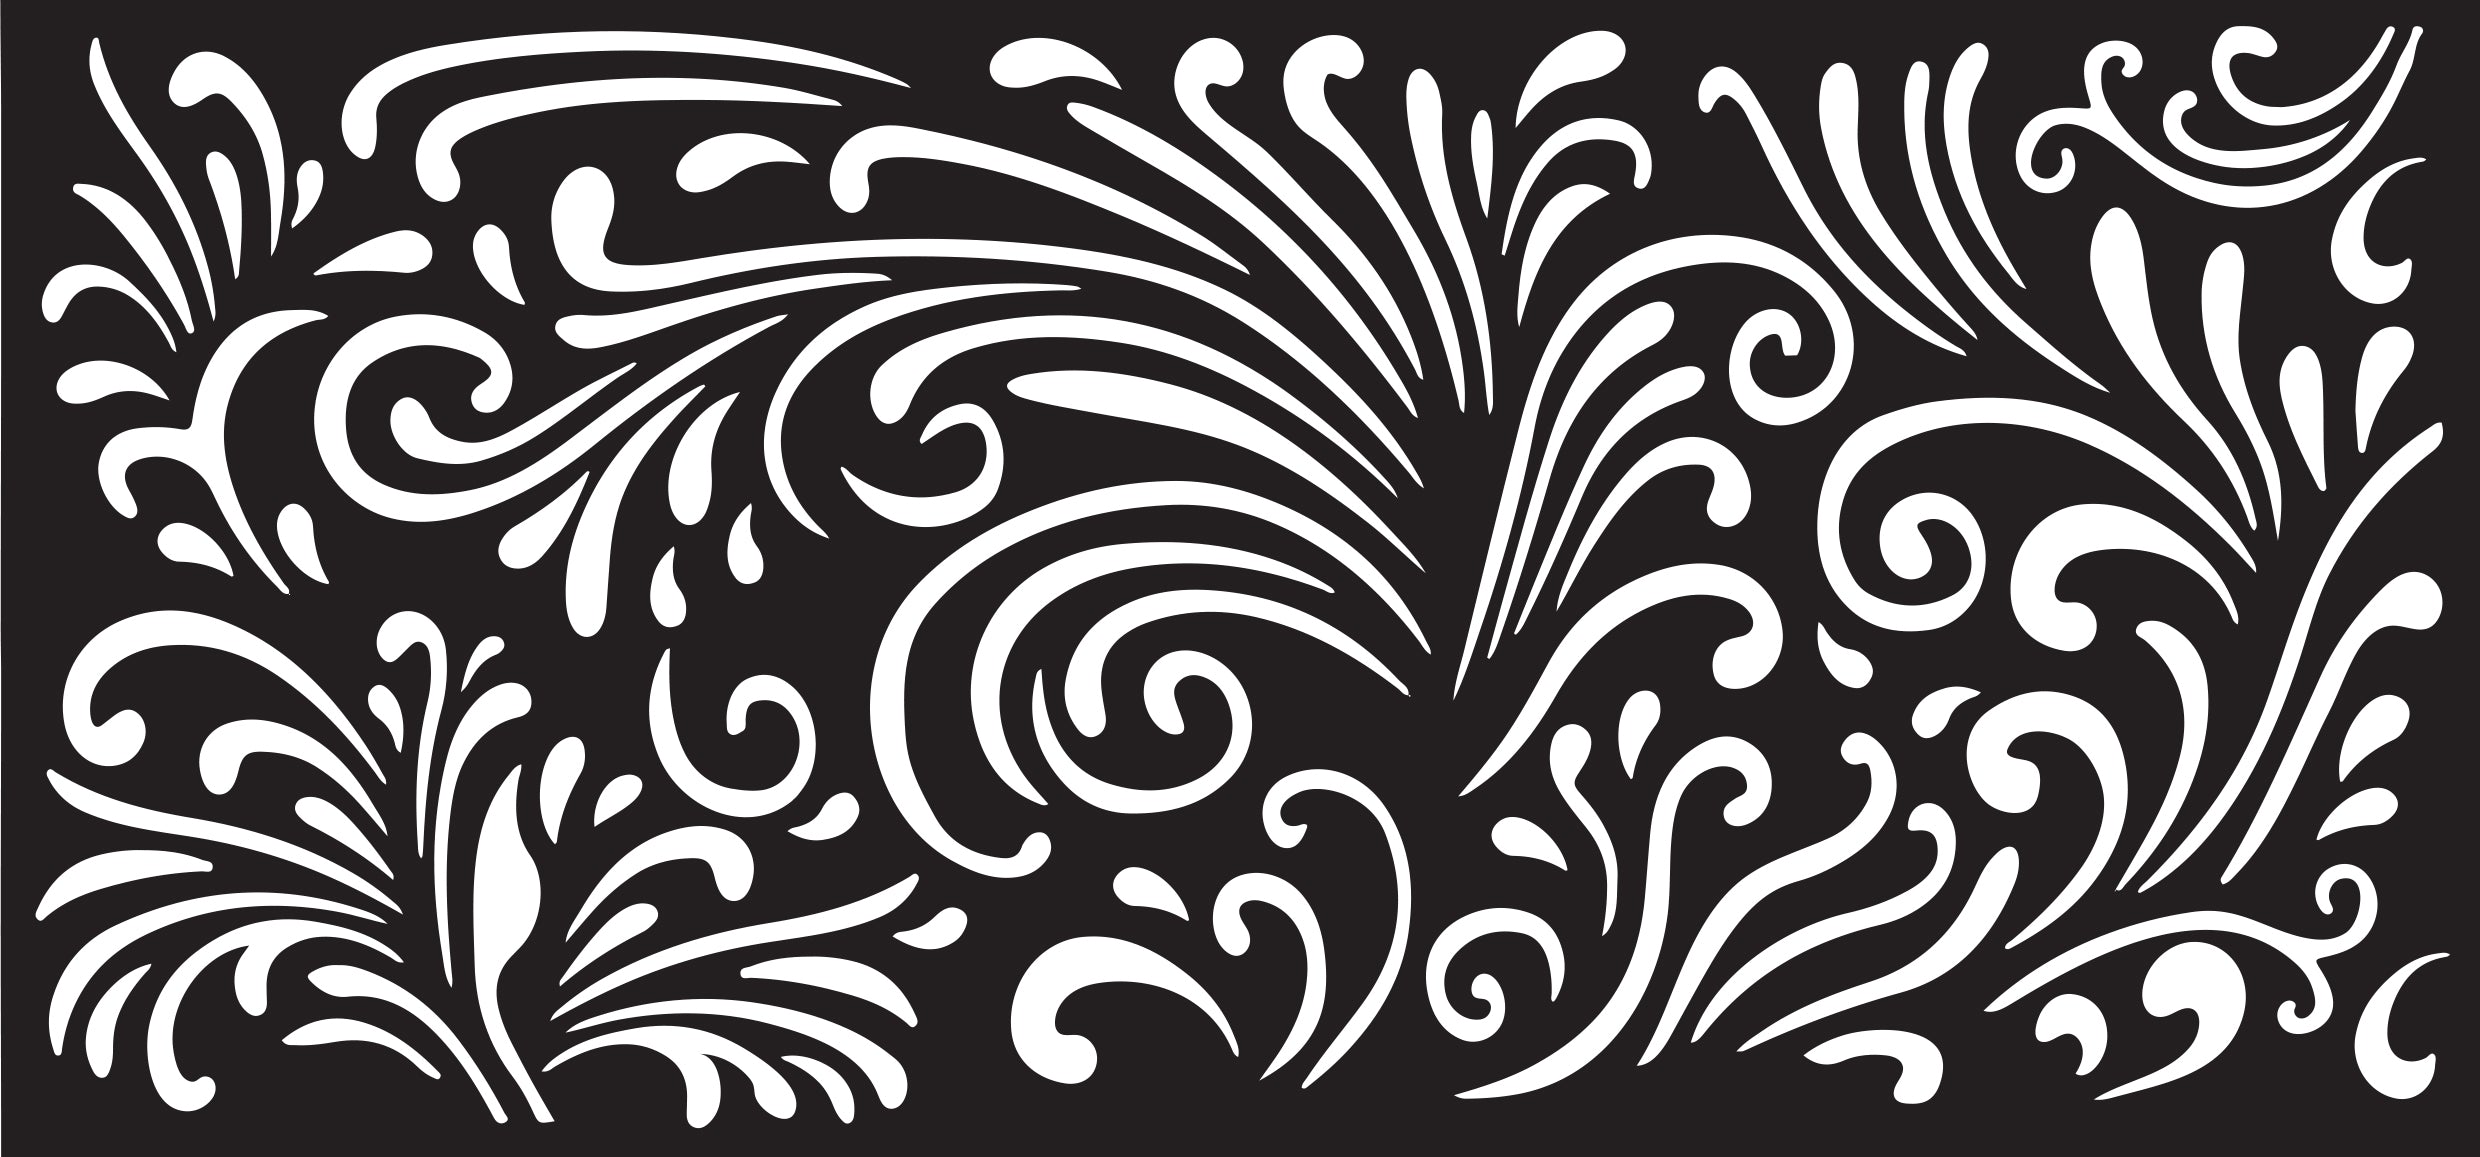 Creative Expressions Sam Poole Swirly Wallpaper 4 in x 8 in Stencil